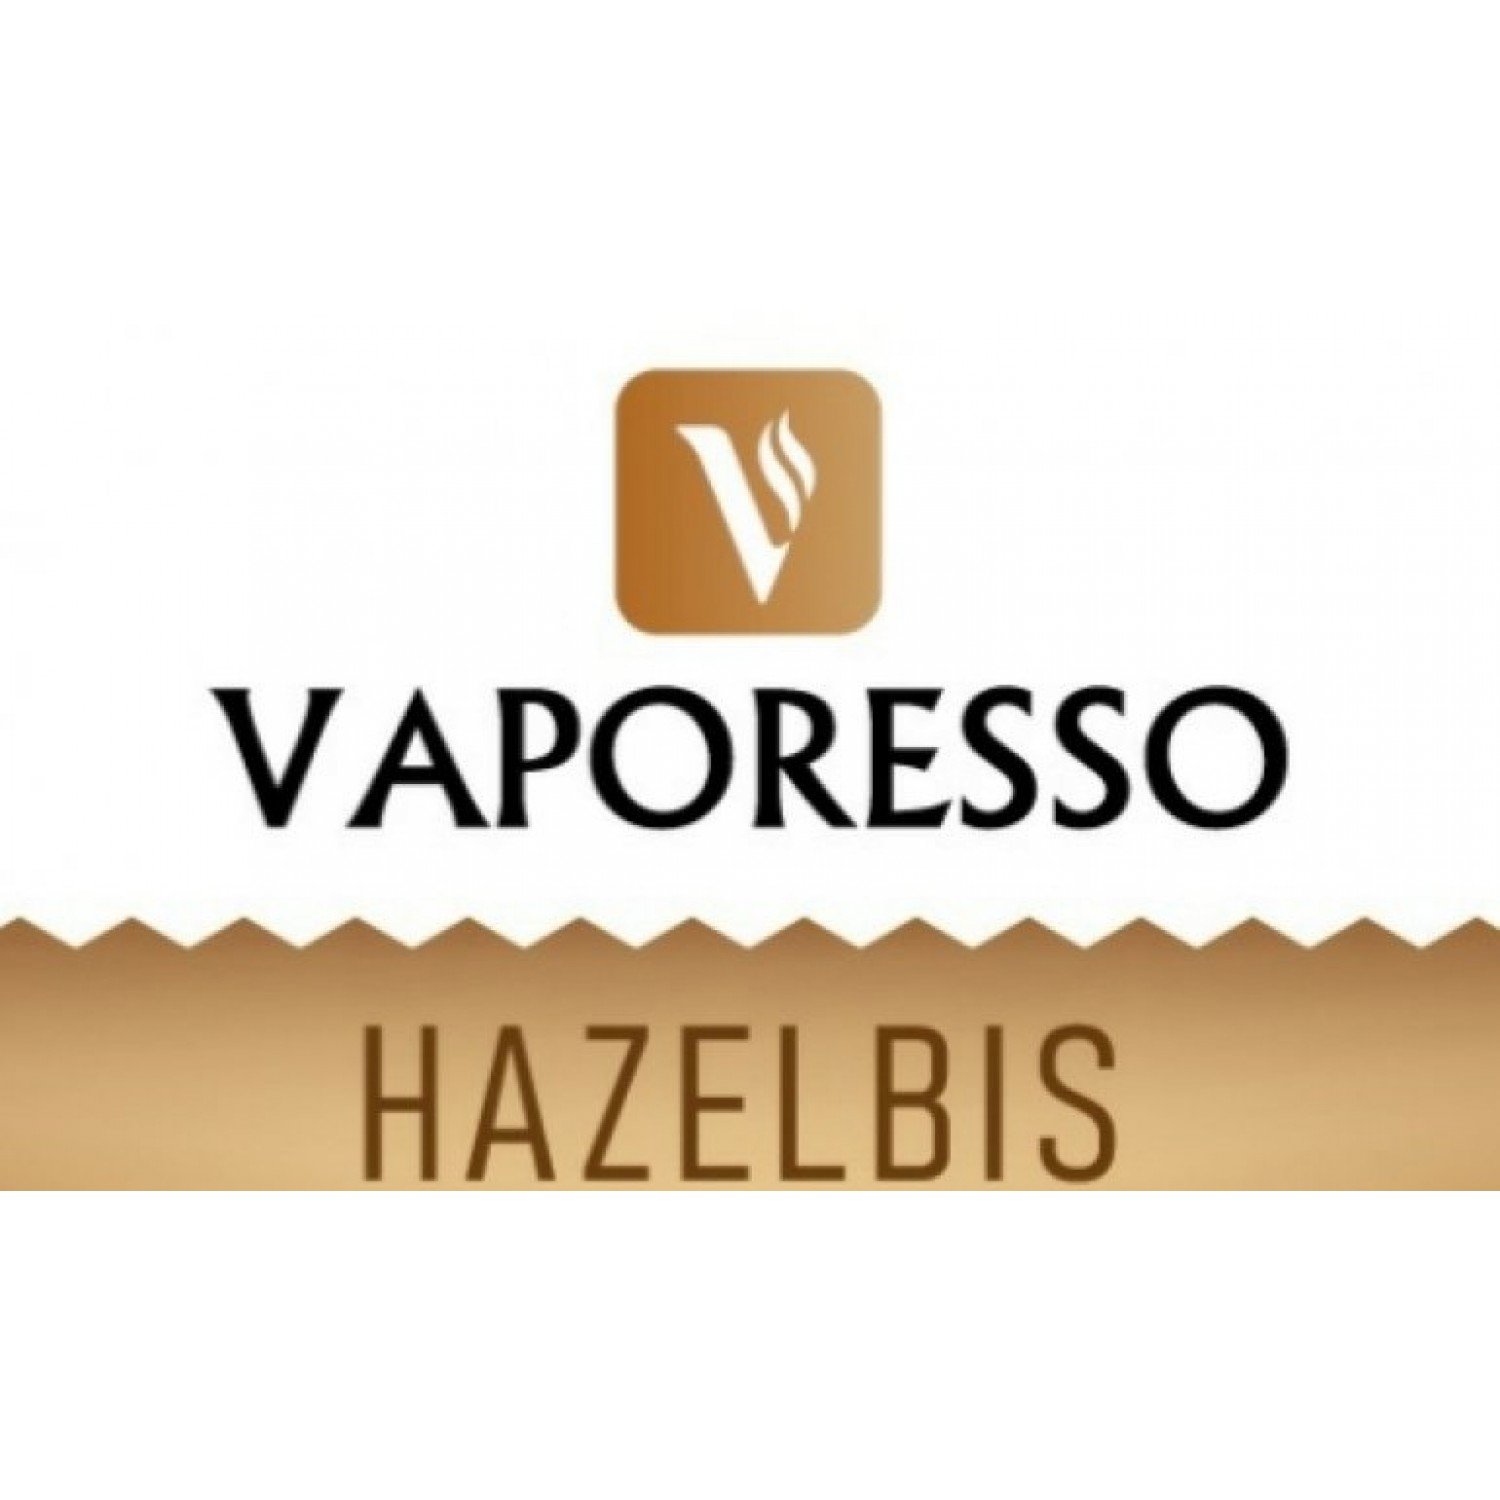 Vaporesso - Hazelbis 30 ml Elektronik Sigara Likiti